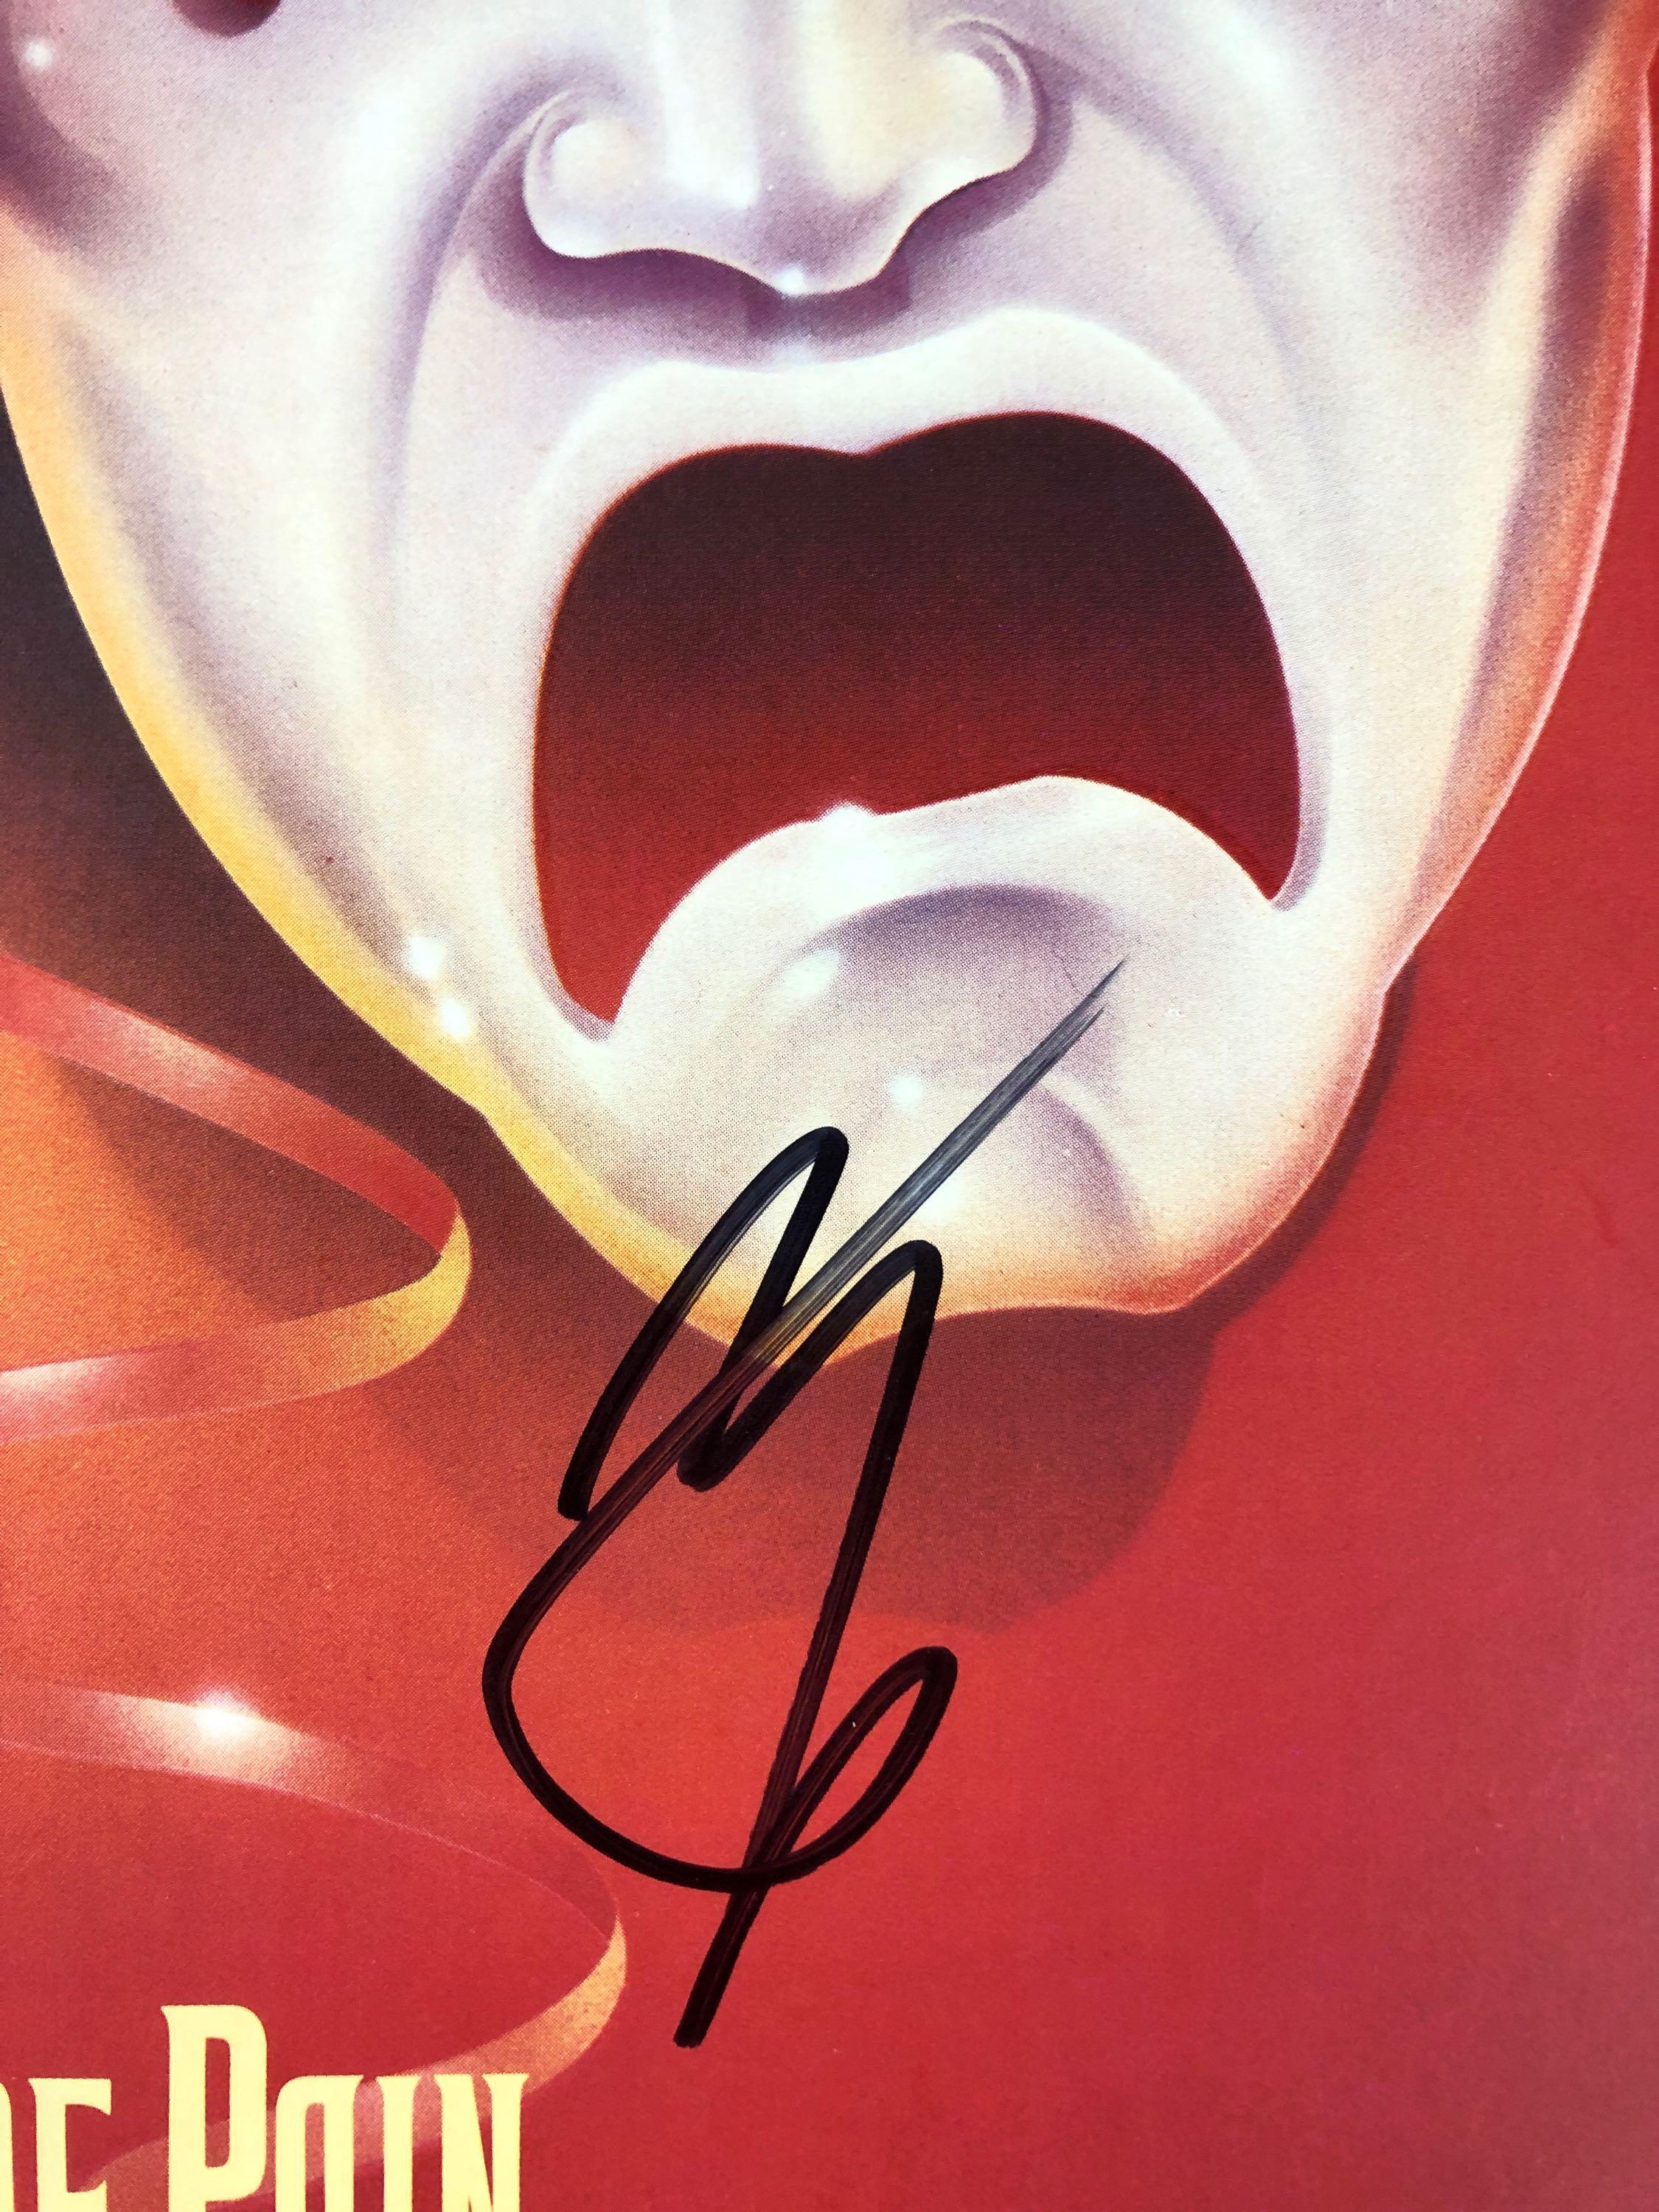 Motley Crue "Theater Of Pain" Autographed Album by Vince Neil